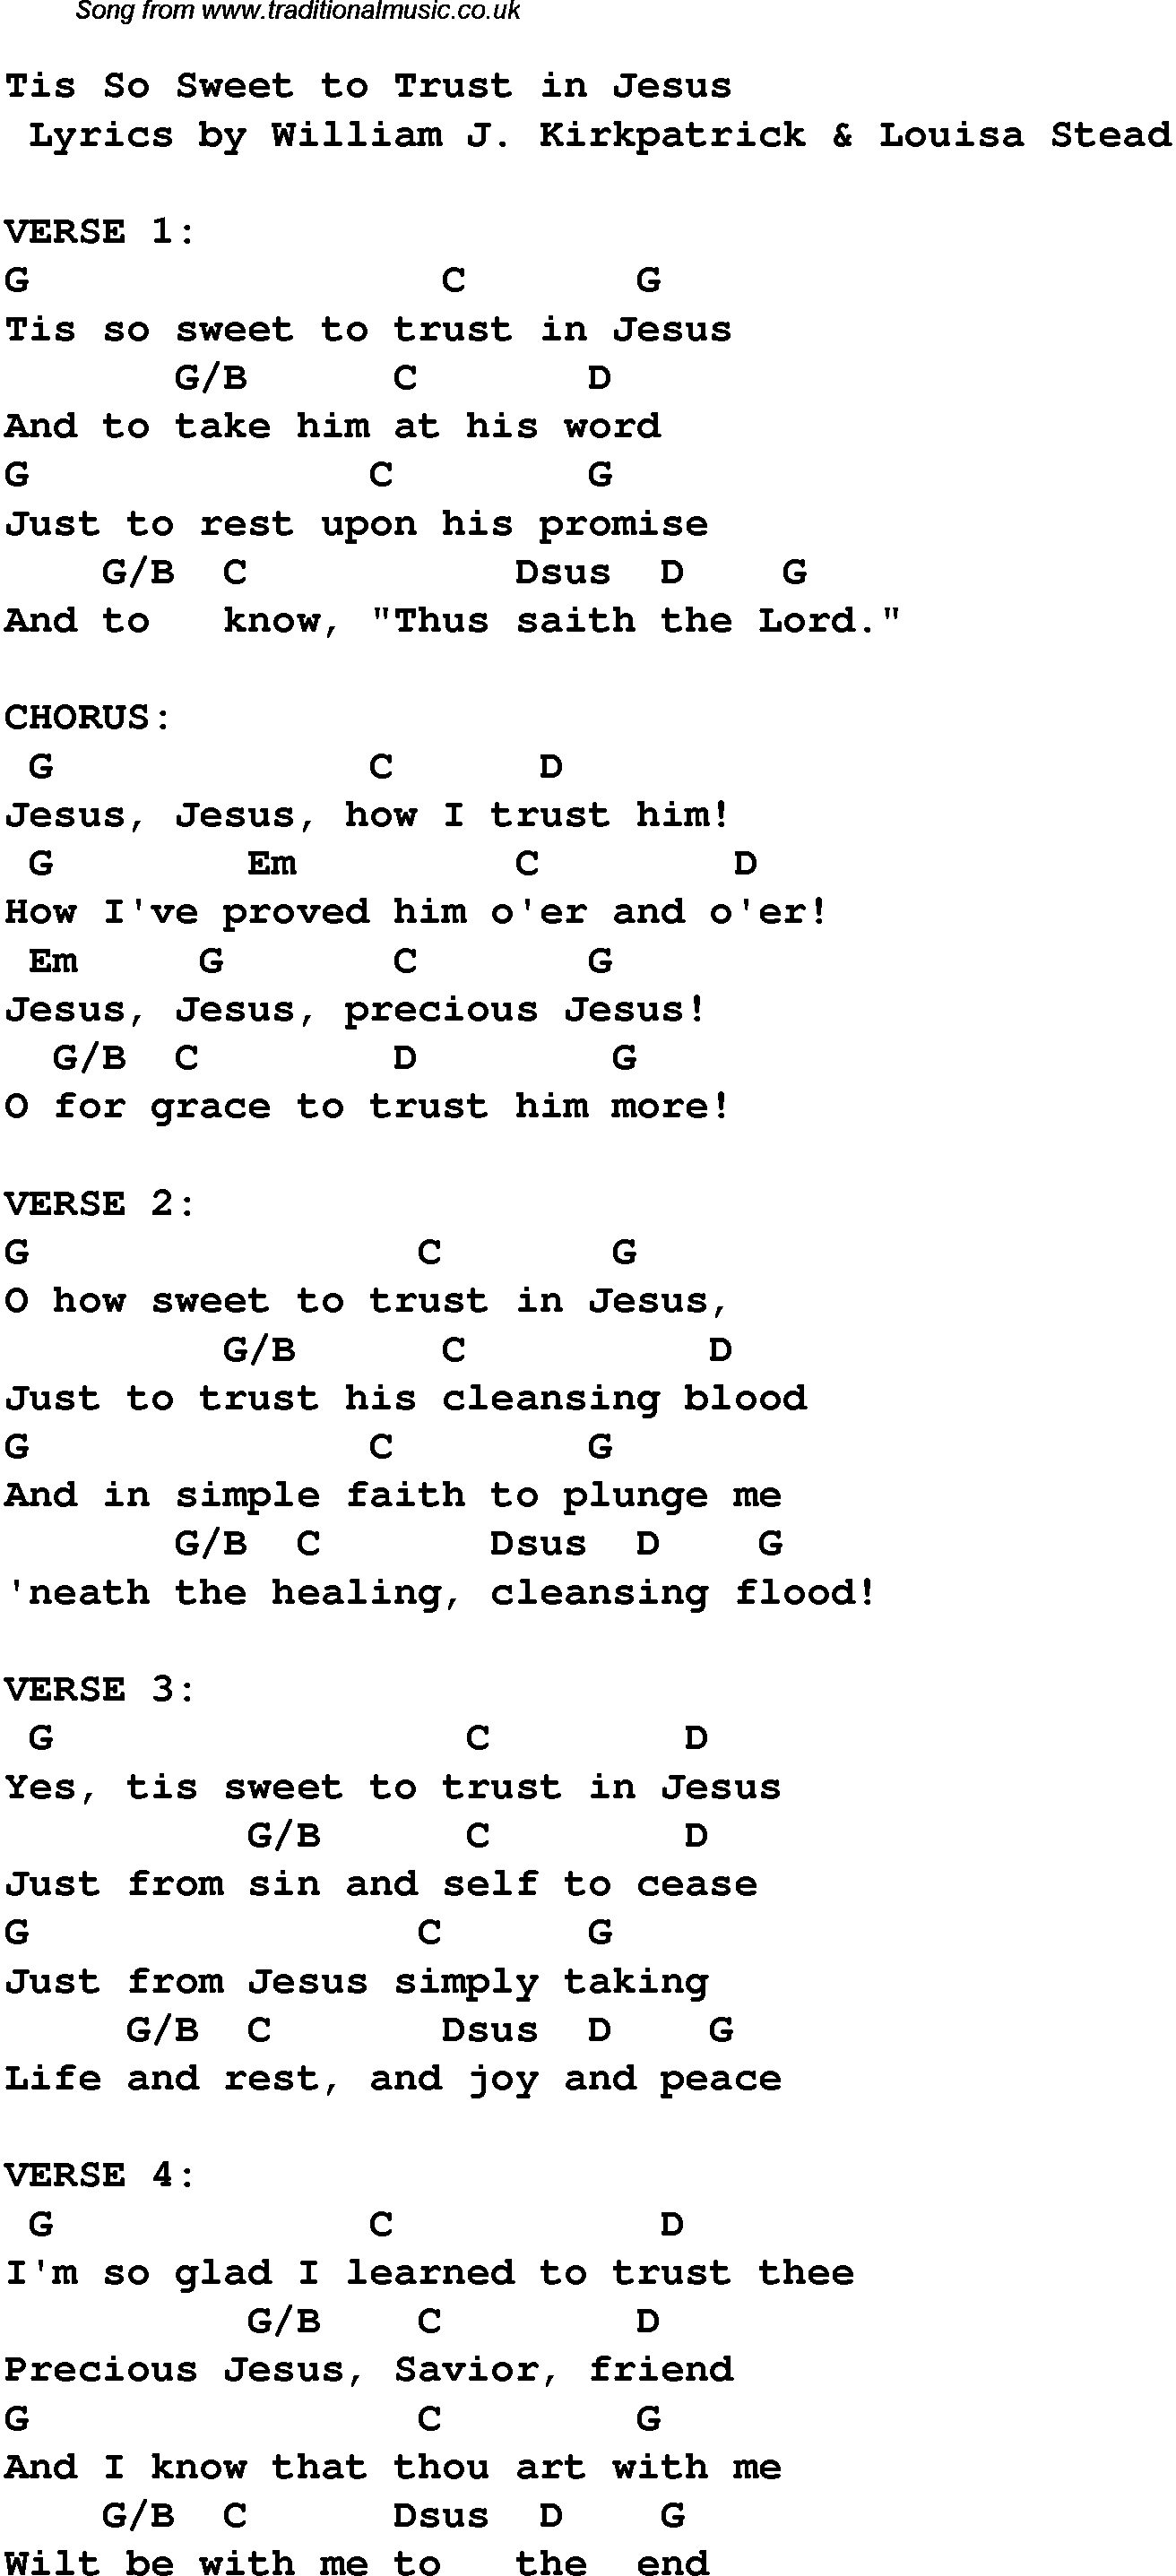 Gospel Song: tis-so-sweet-to-trust-in-jesus, lyrics and chords.